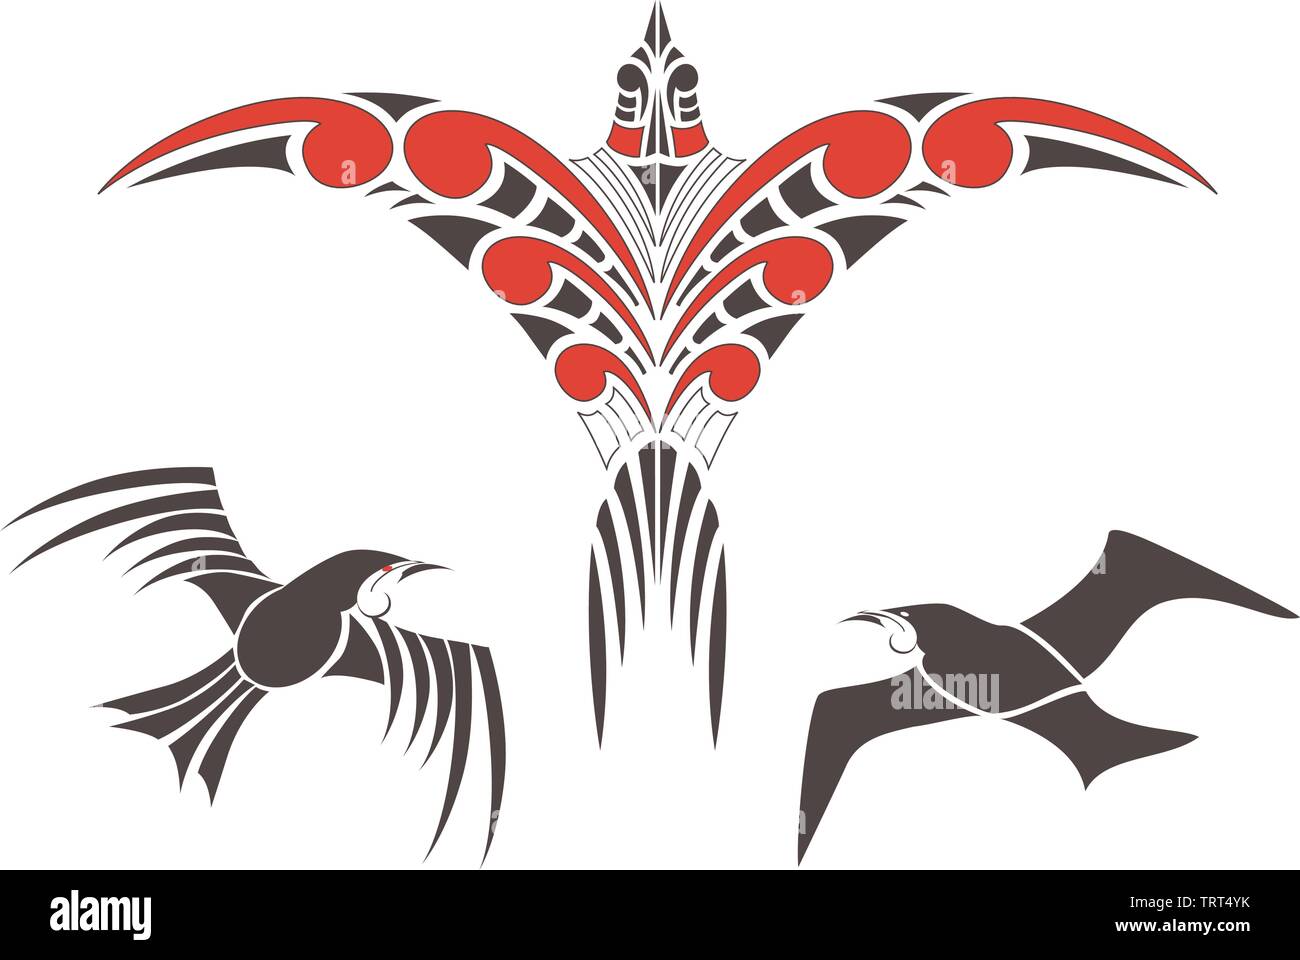 Maori Koru Designs